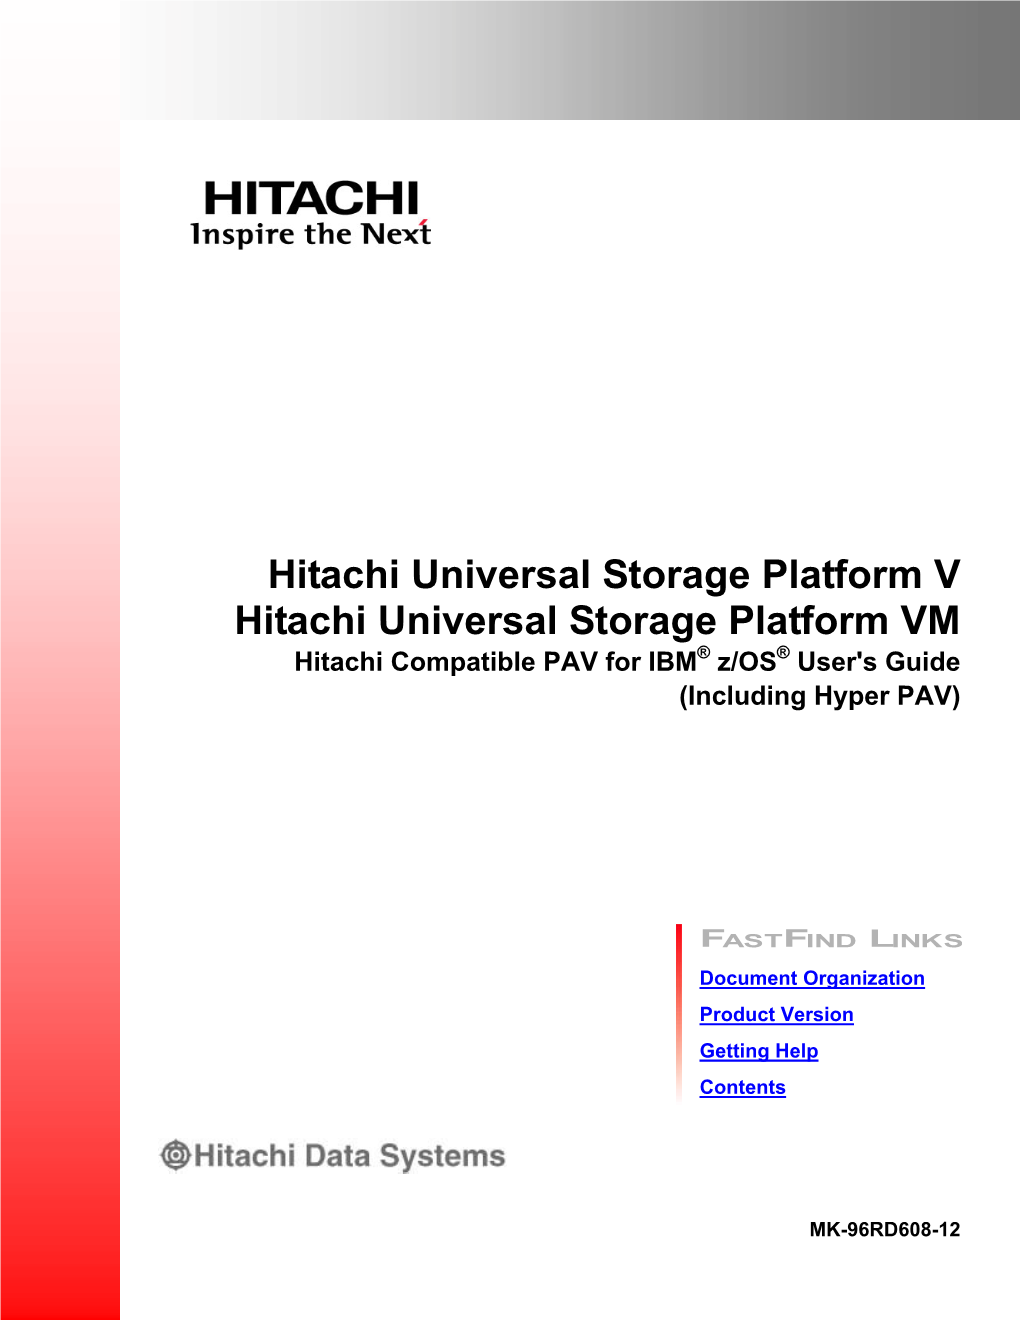 Hitachi USP V/VM Compatible PAV for IBM Z/OS User's Guide